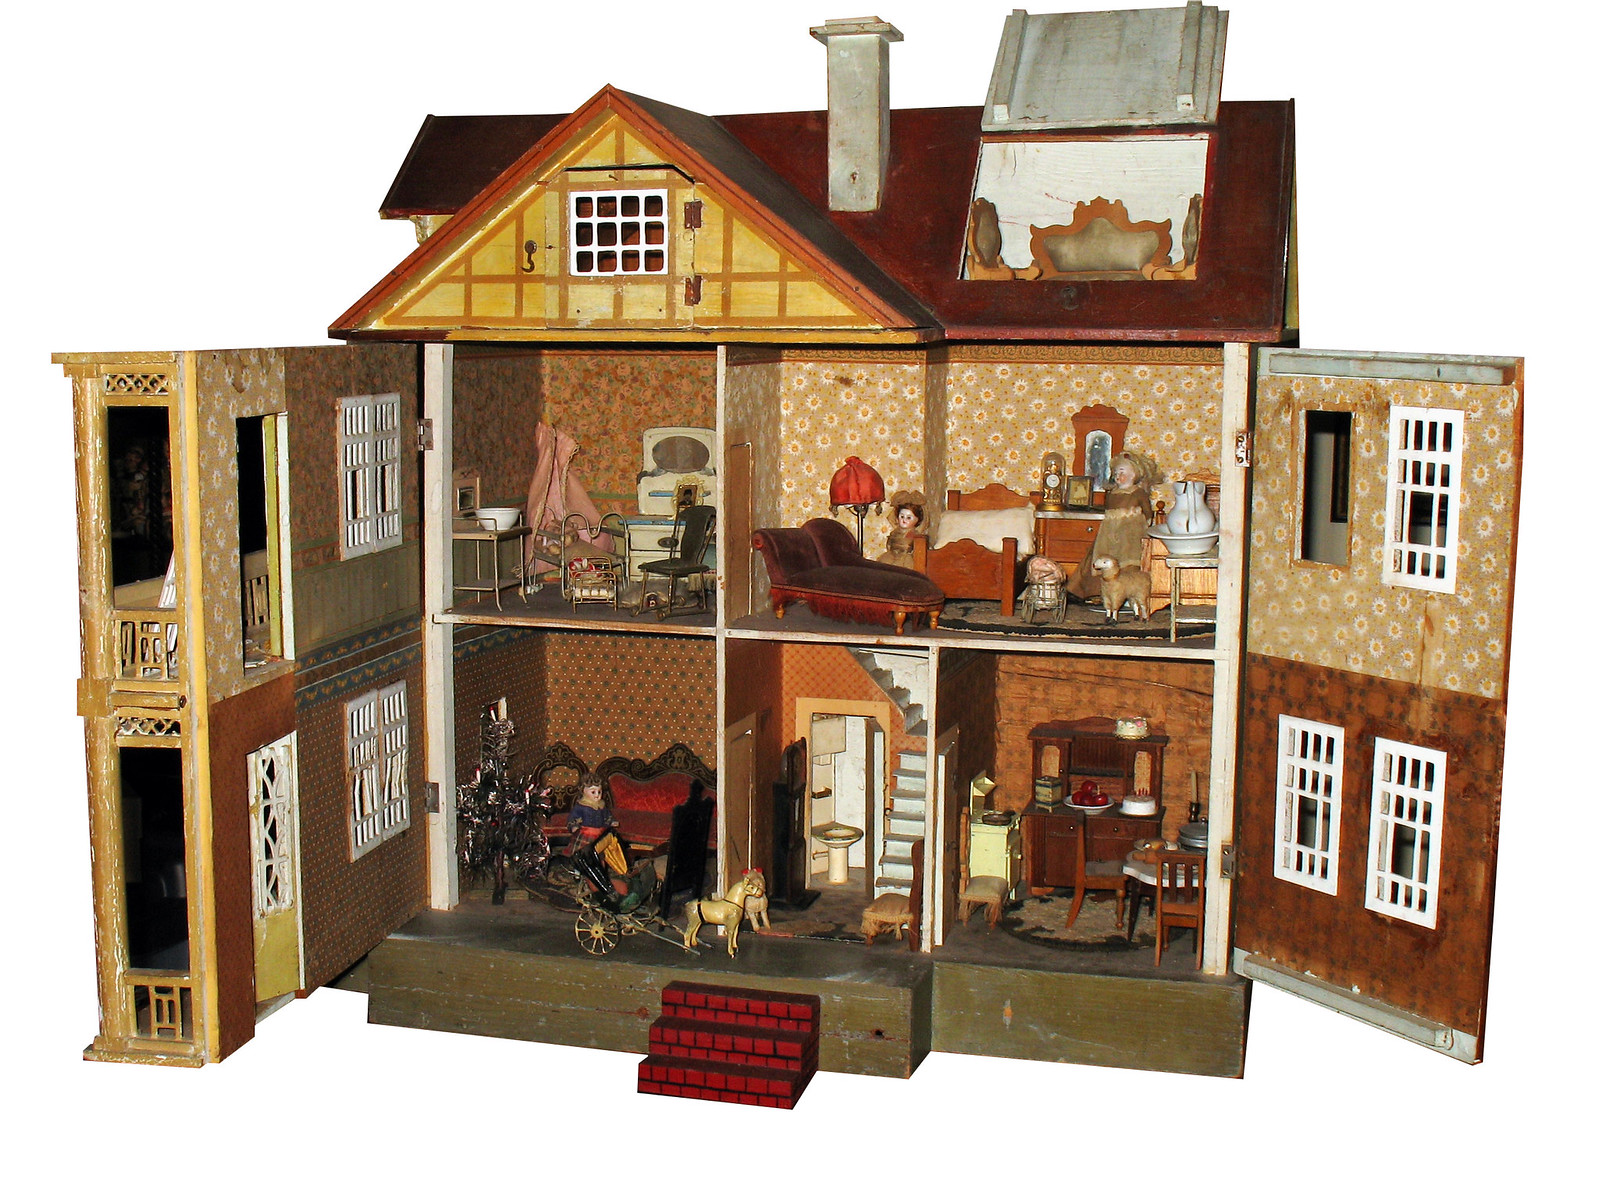 Antique English Dollhouse. Credit Paul Keleher